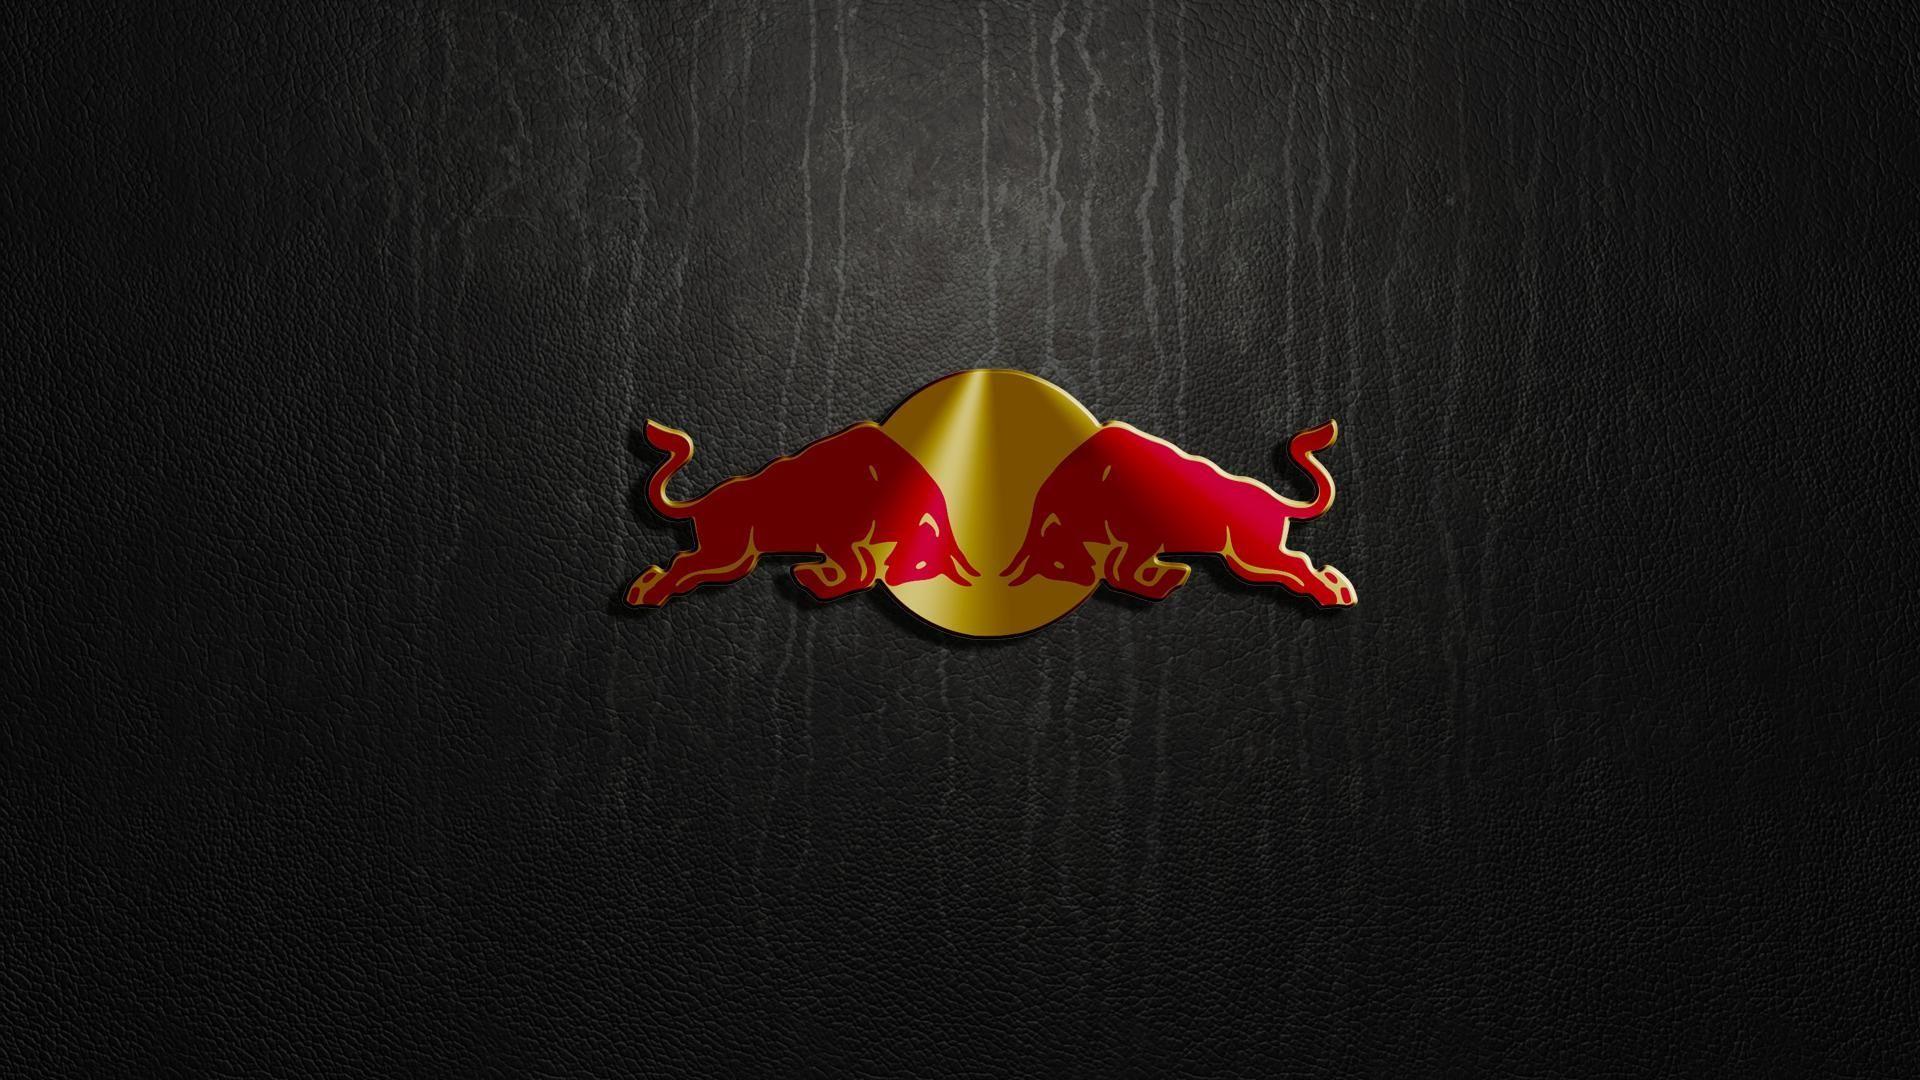 4K Red Bull Wallpapers - Top Free 4K